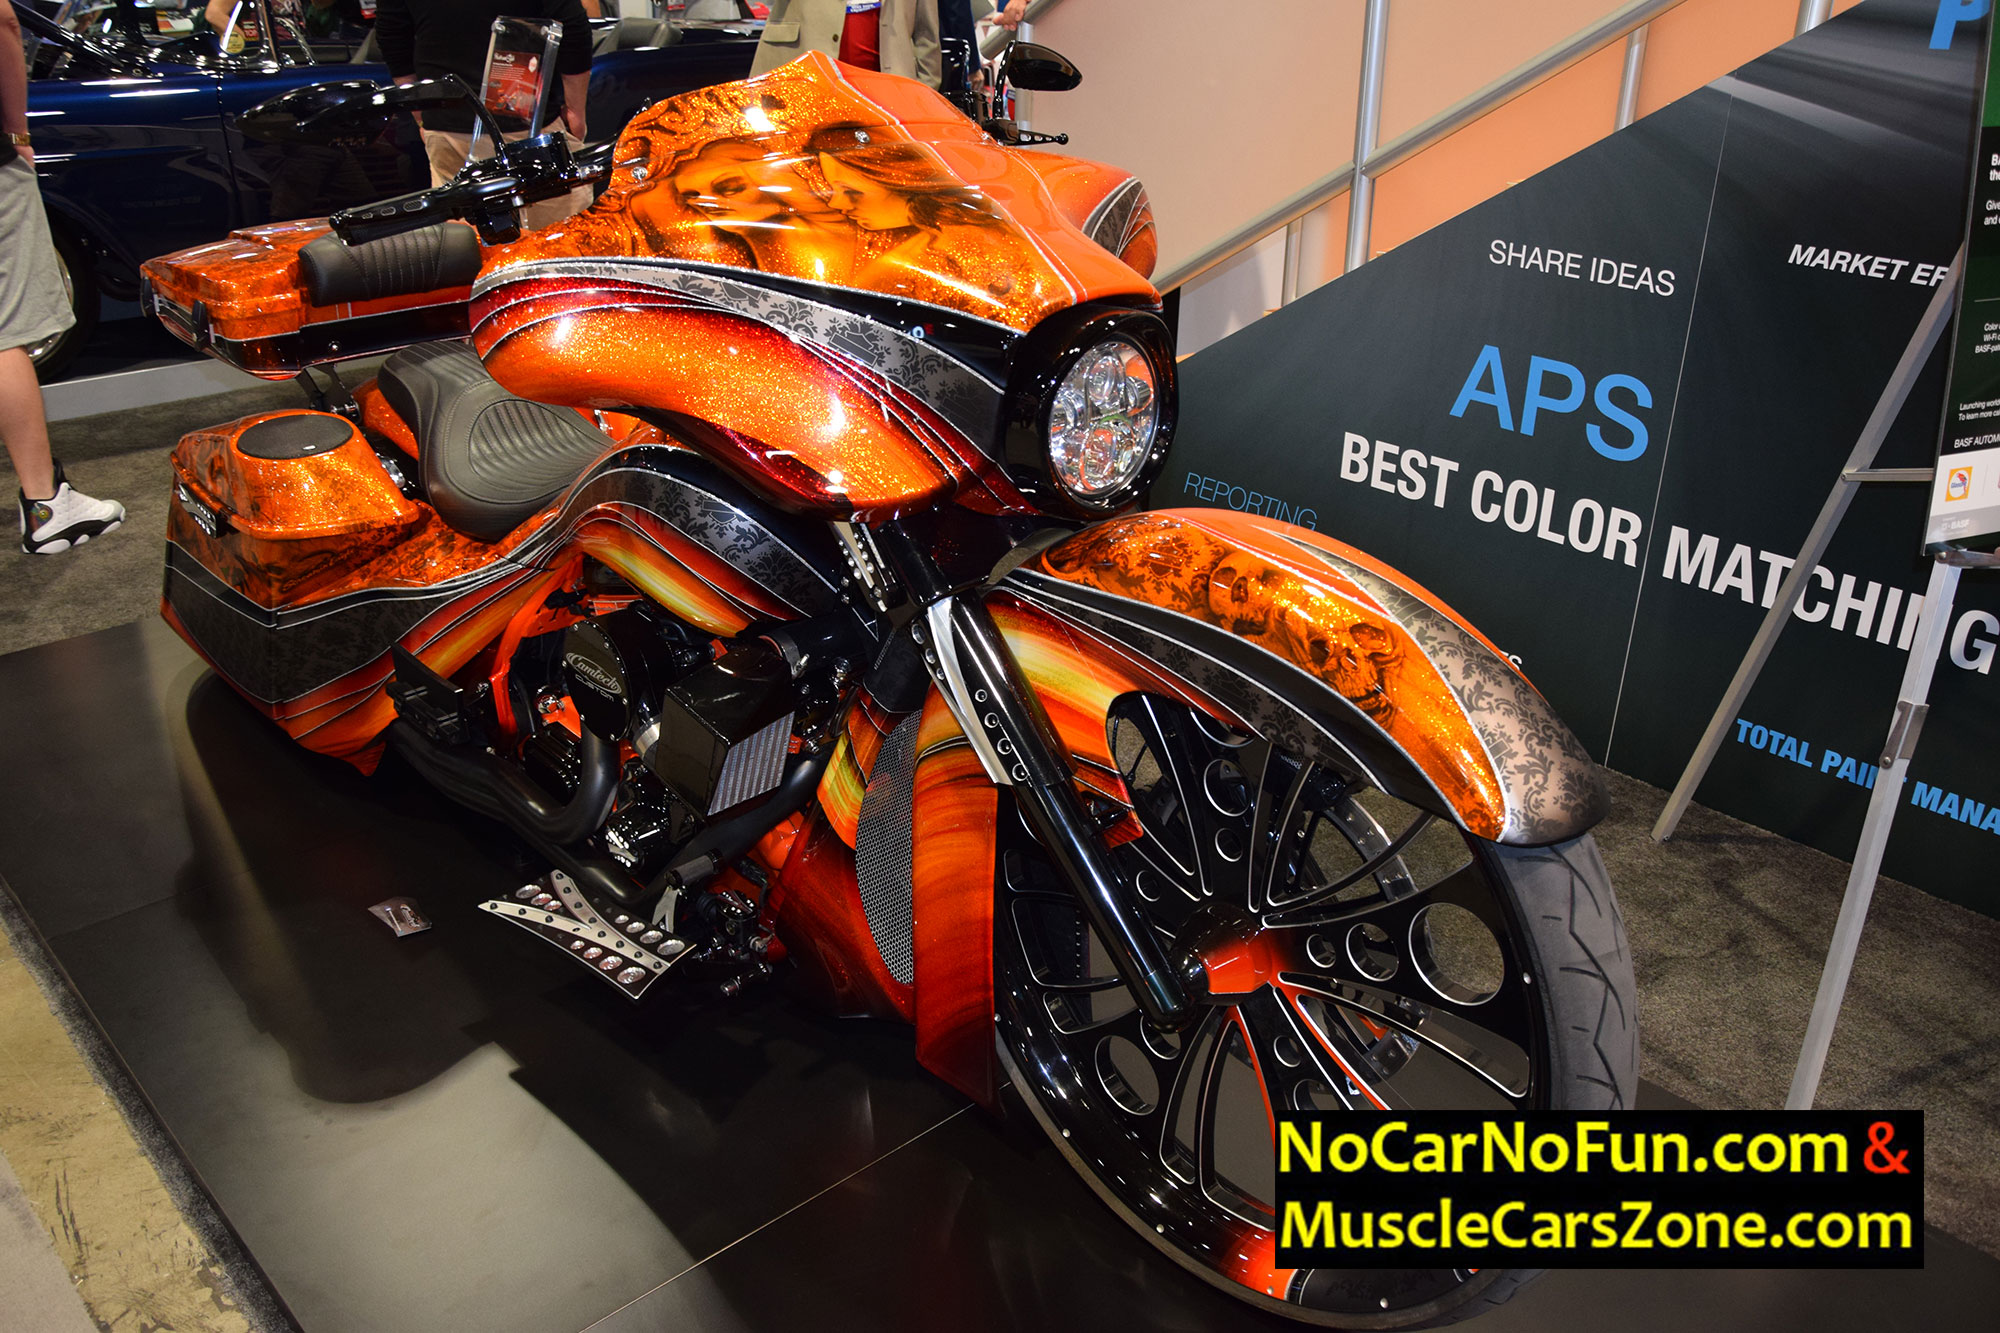 Bagged Bike Motorcycle 2 - Sema Show 2016 Vegas